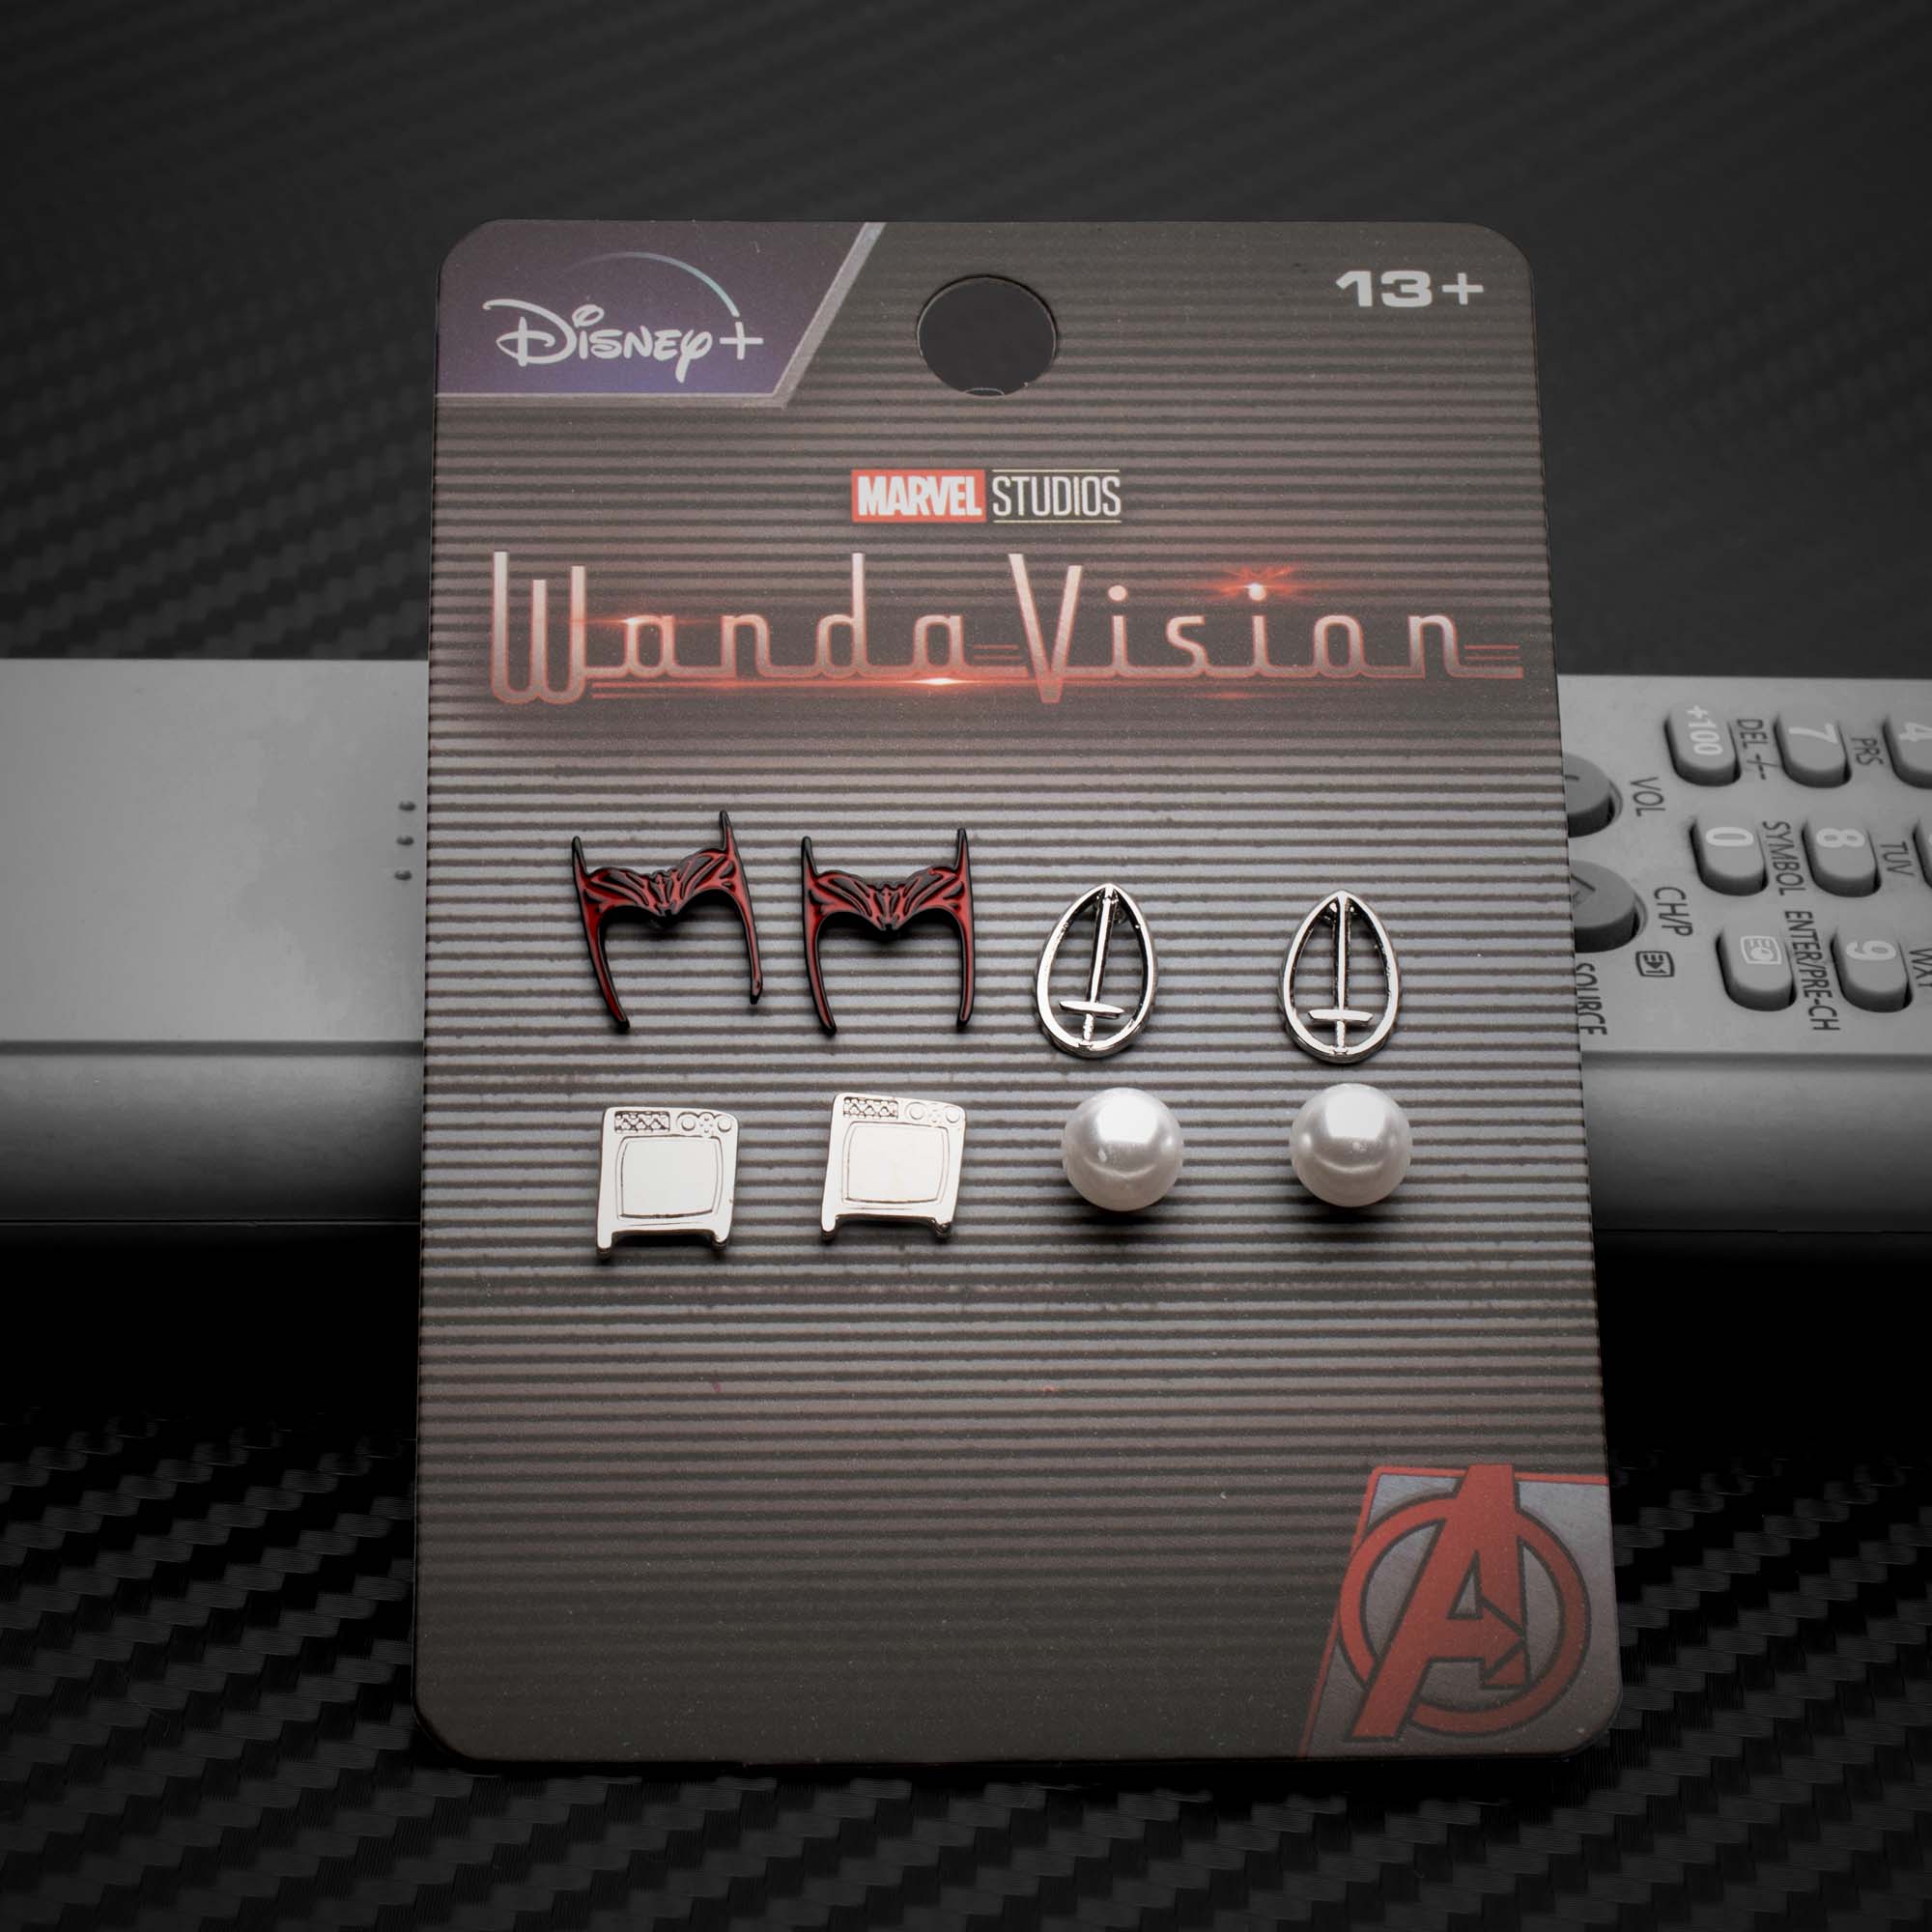 Marvel Wandavision Stud Earrings Set (4pcs)